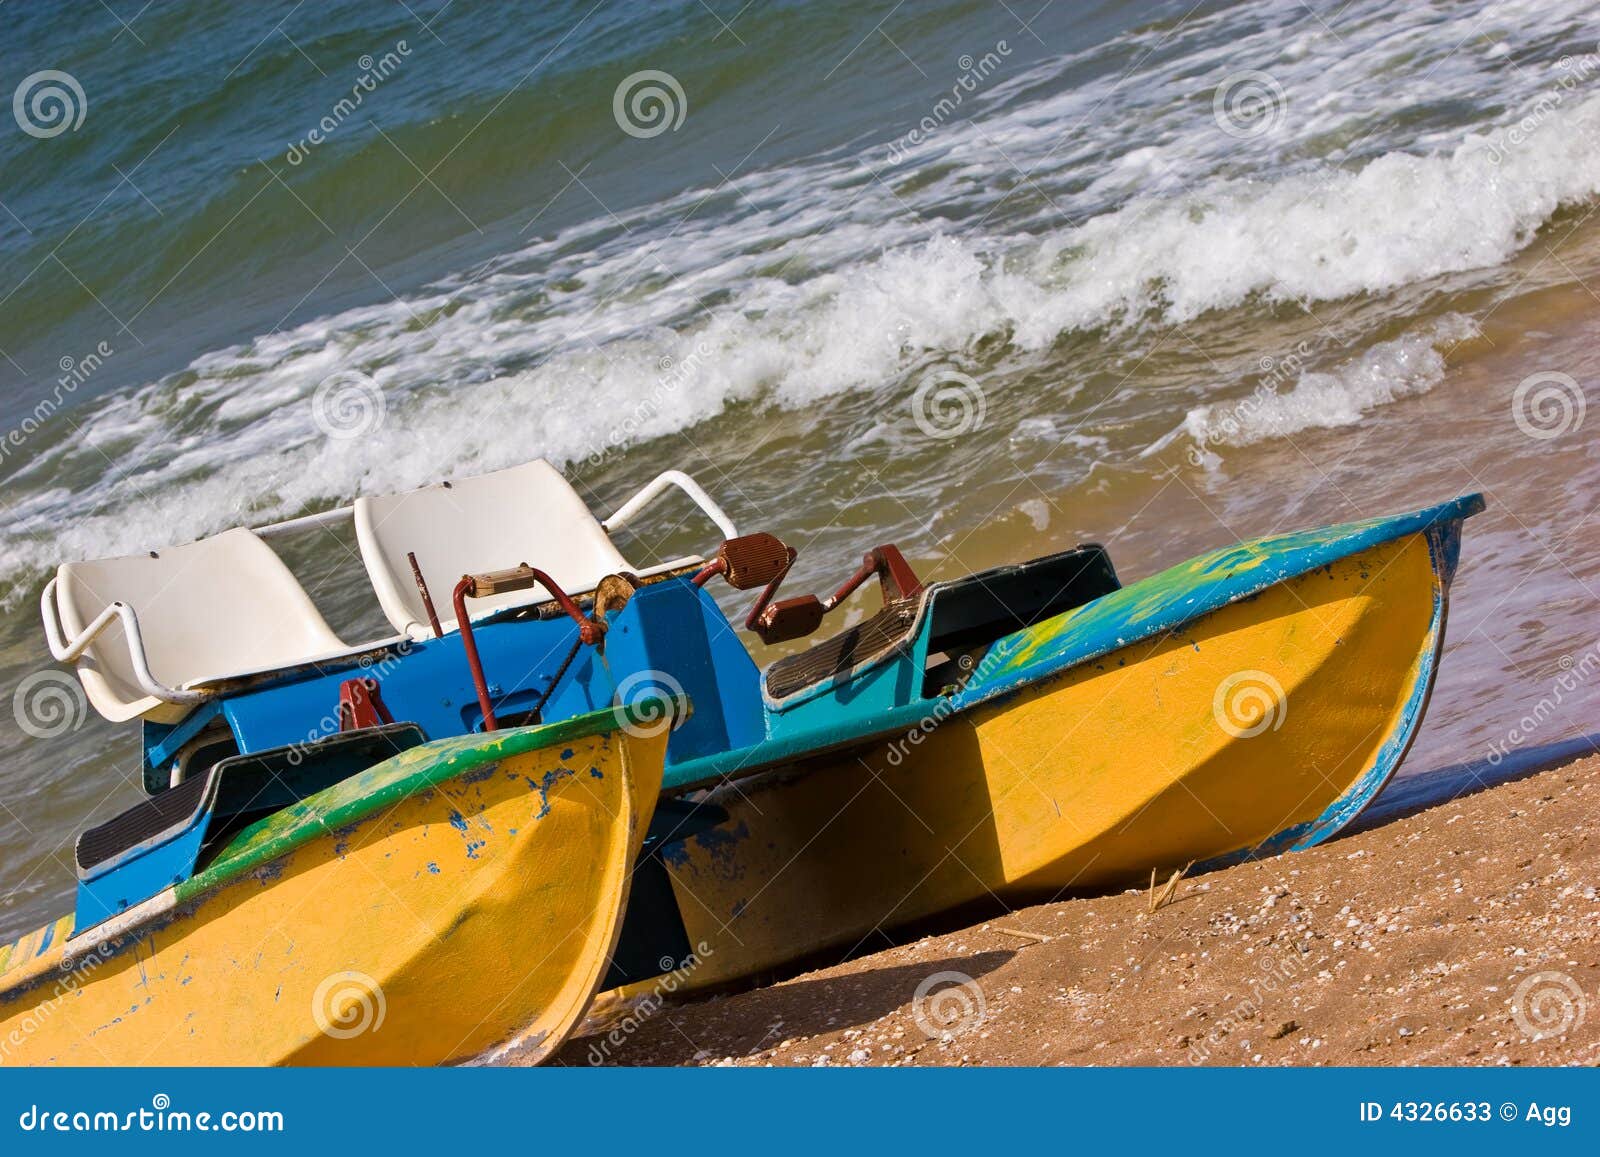 Leisure series: promenade catamaran on the beach of stormy sea.